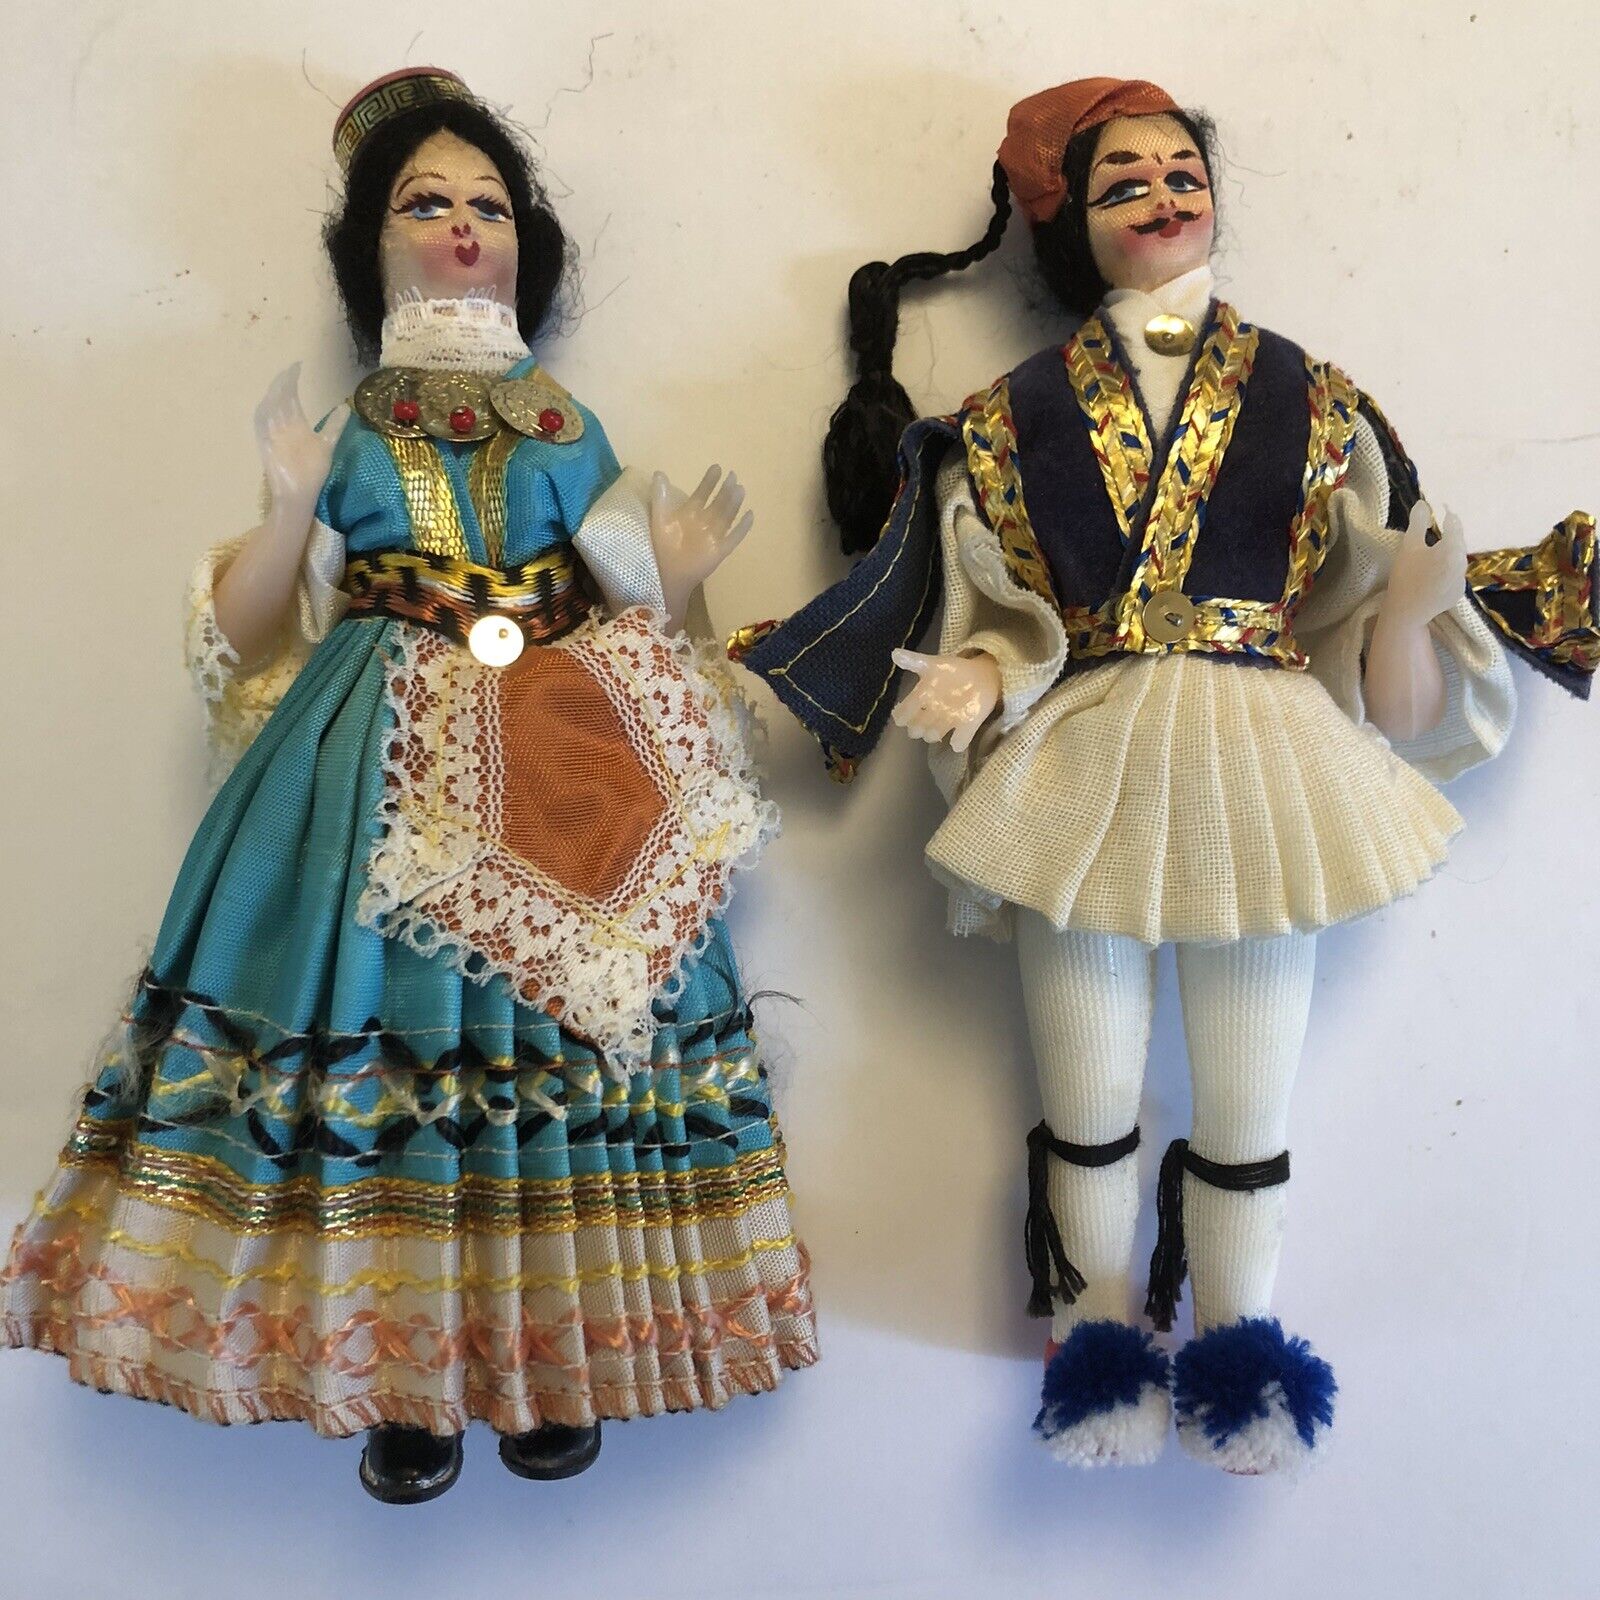 Greek Souvenir Male And Female Souvenir Dolls  Traditional Dress 6.25-7”